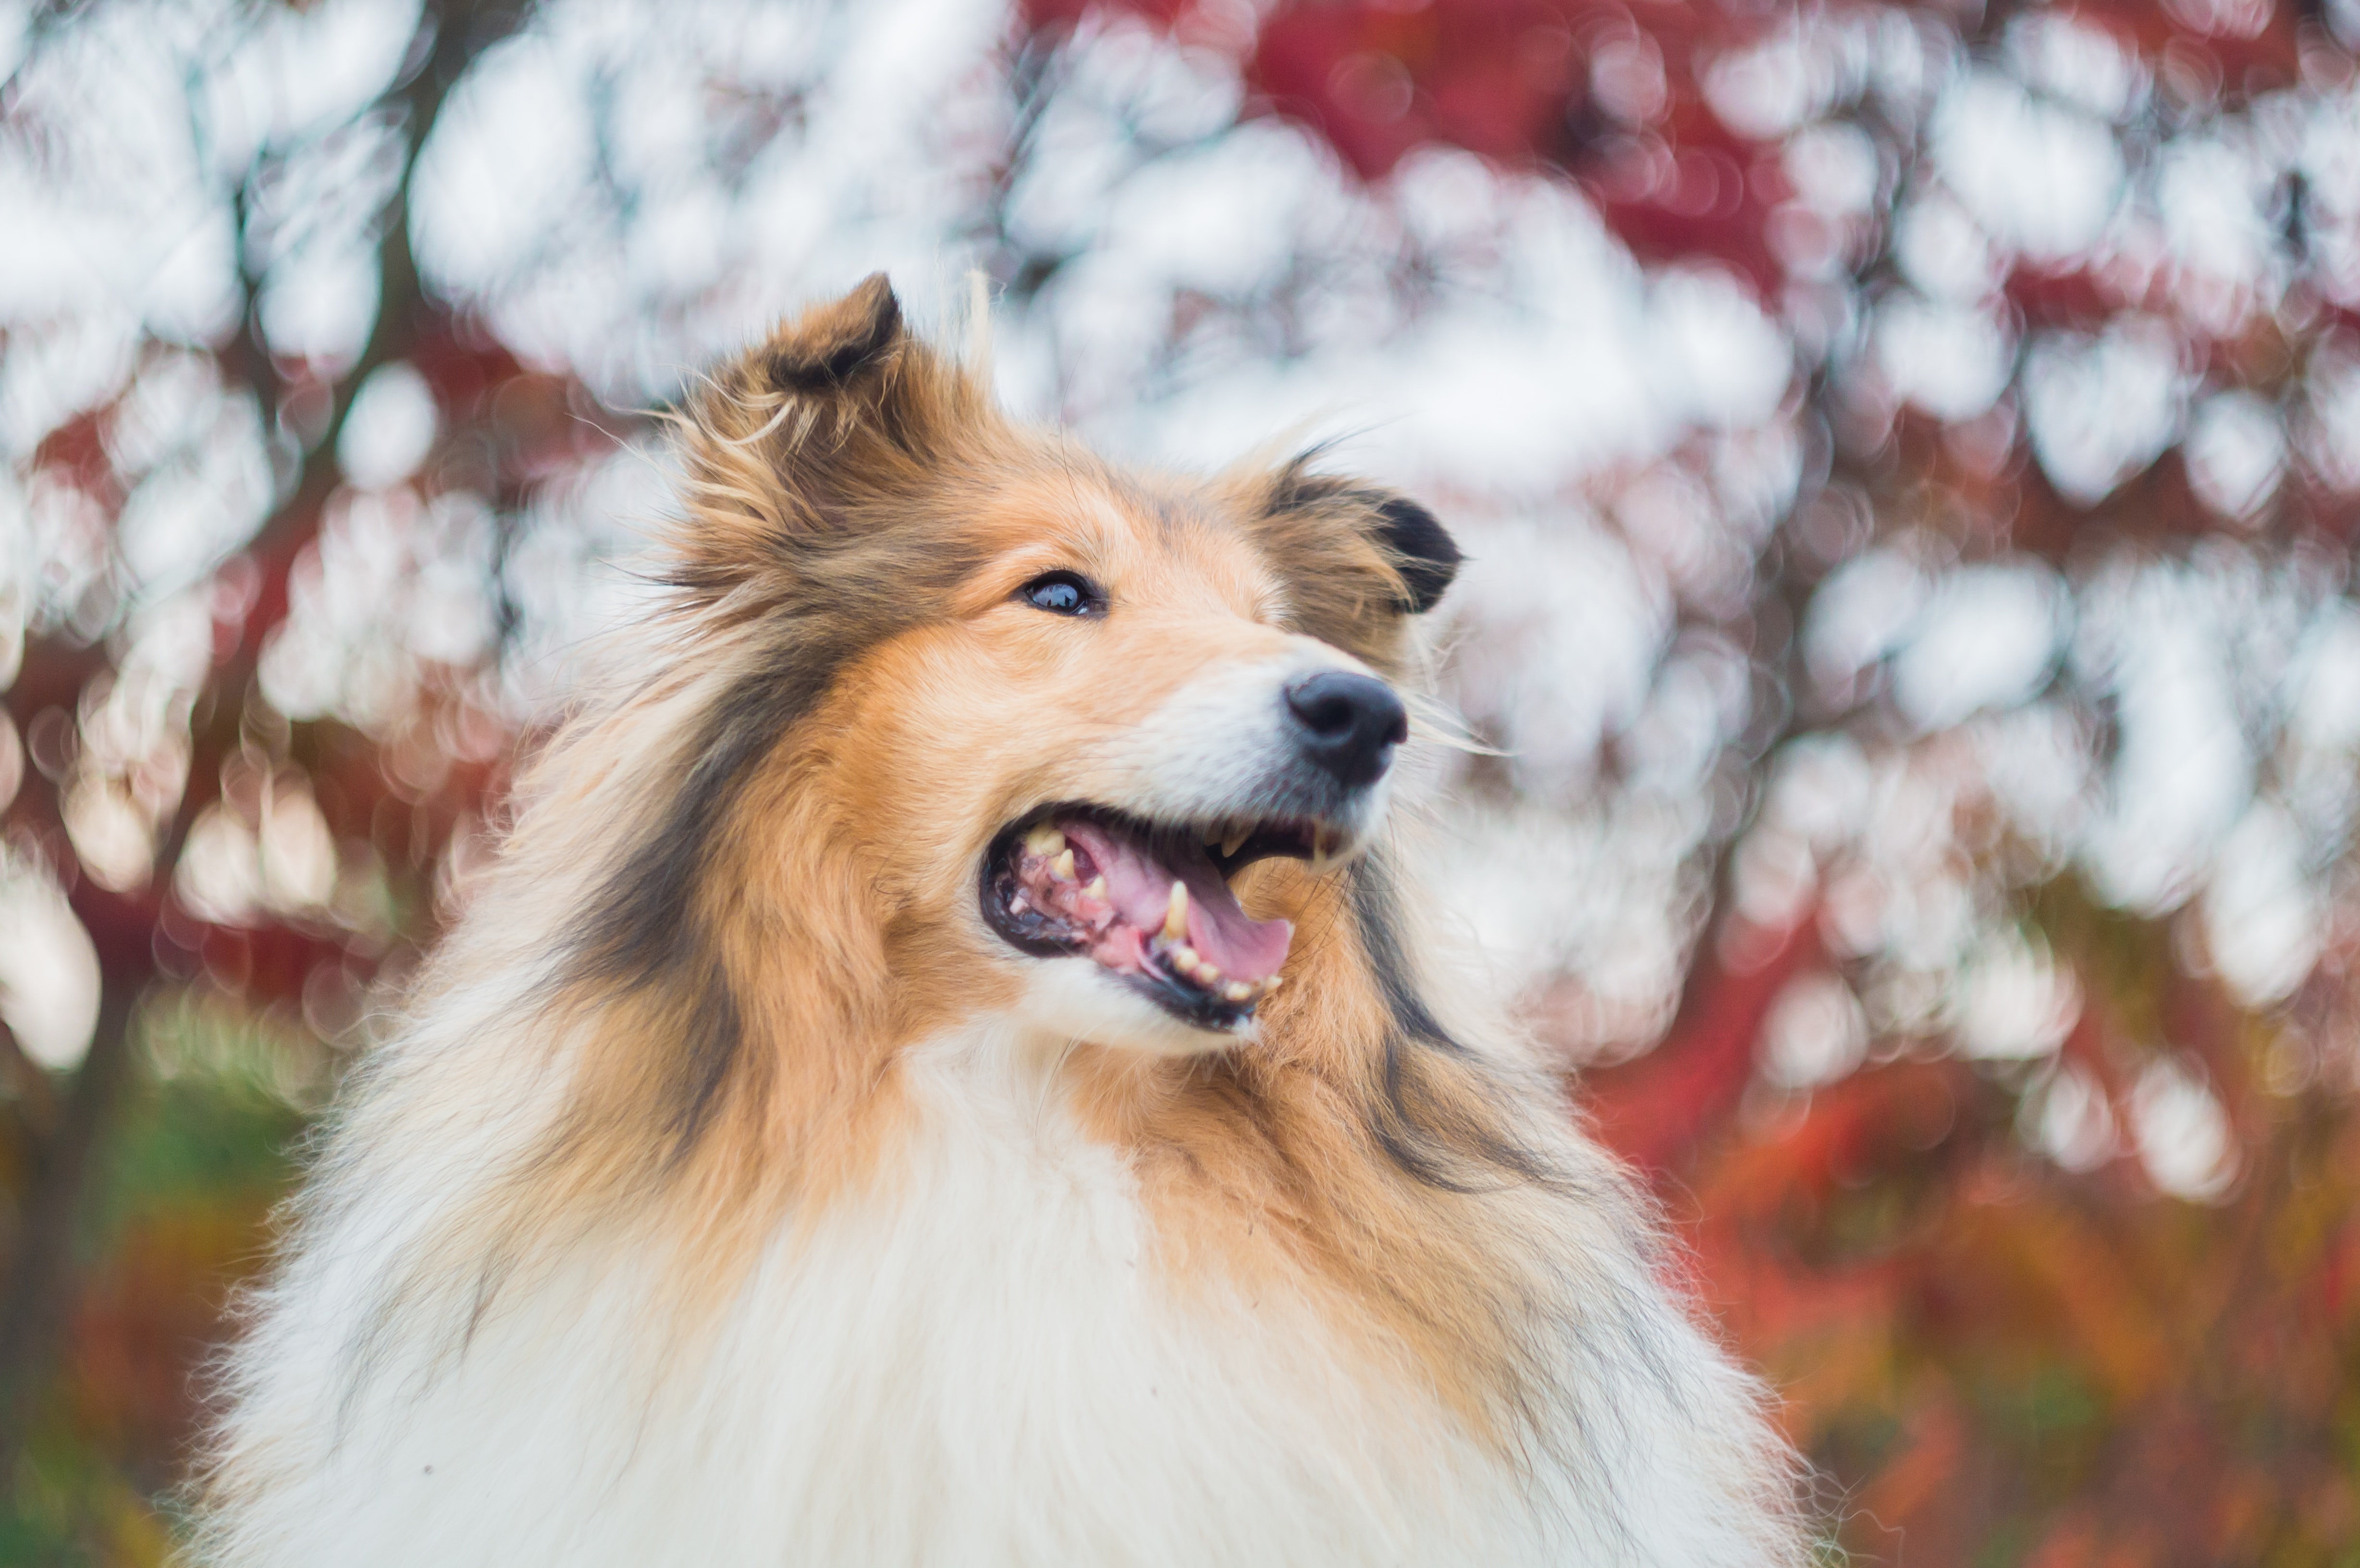 Swedish pet insurer Lassie gets paws on €11m - FinTech Global